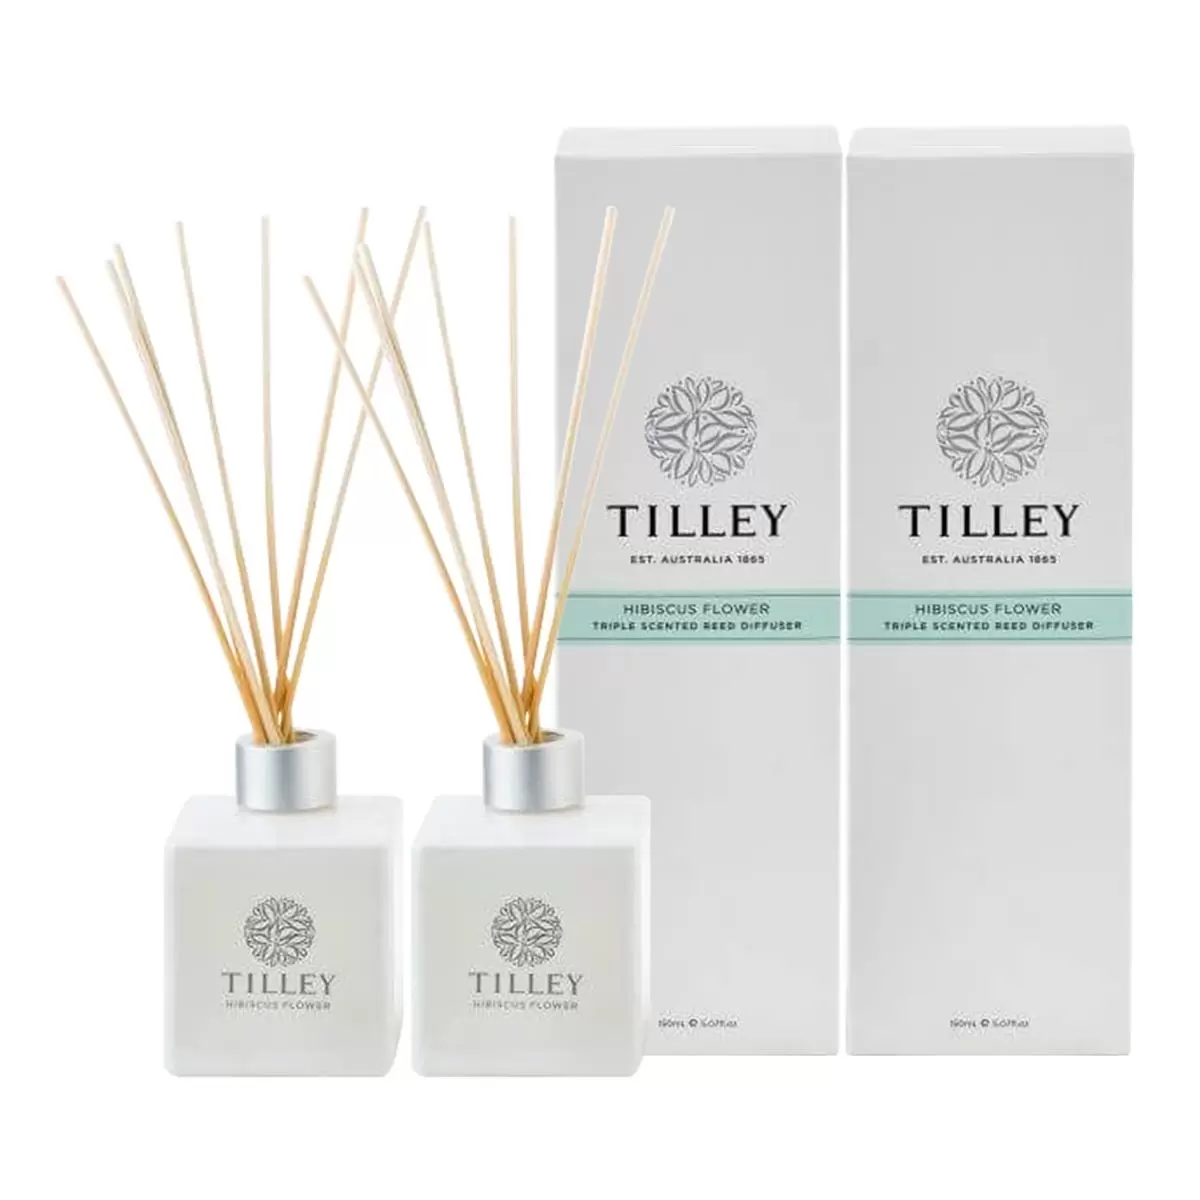 Tilley 澳洲經典香氛擴香組 150毫升 X 2入 扶桑木槿